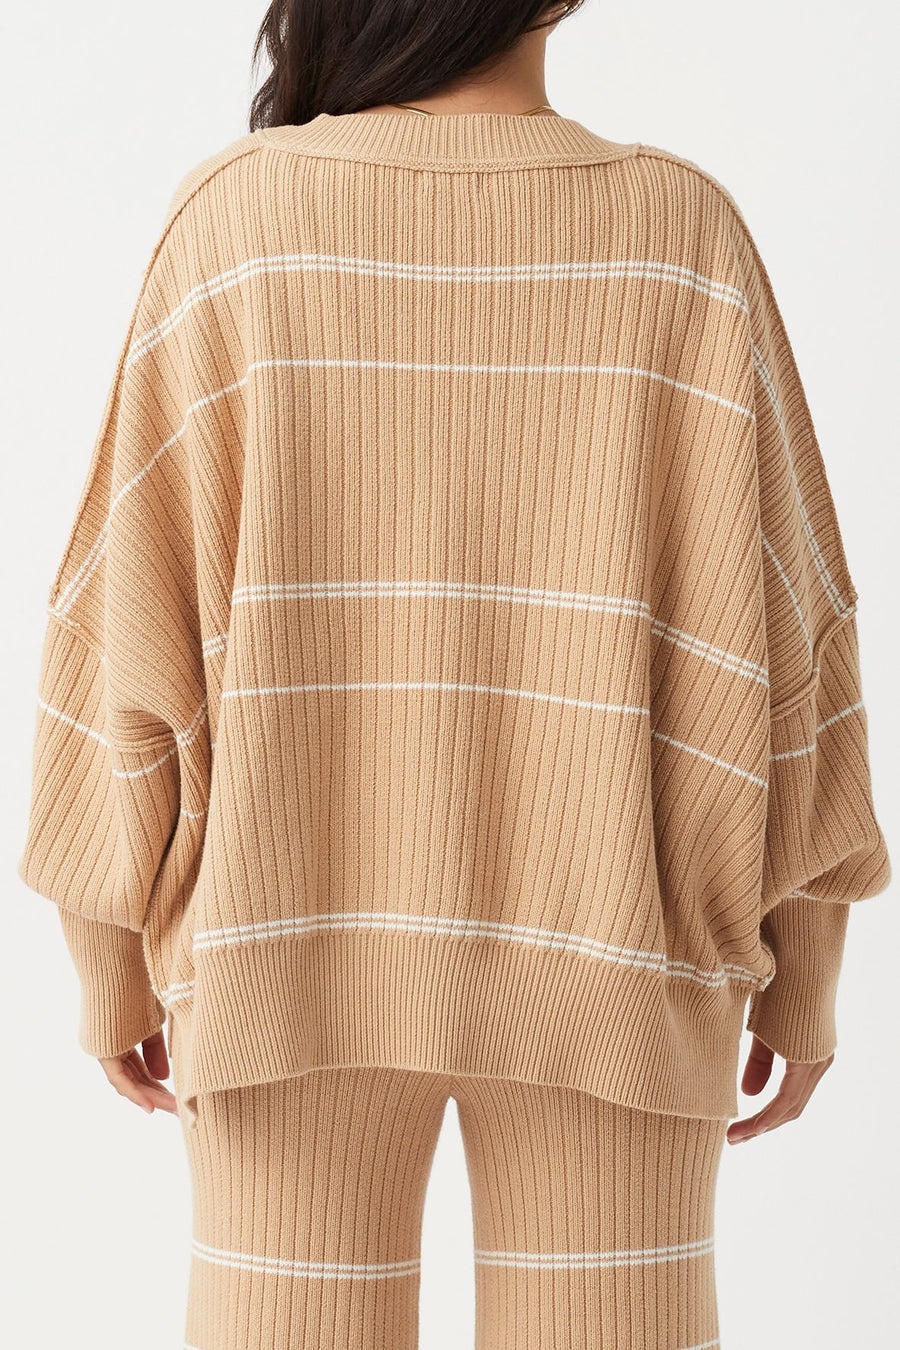 Arcca Vera Organic Knit Sweater